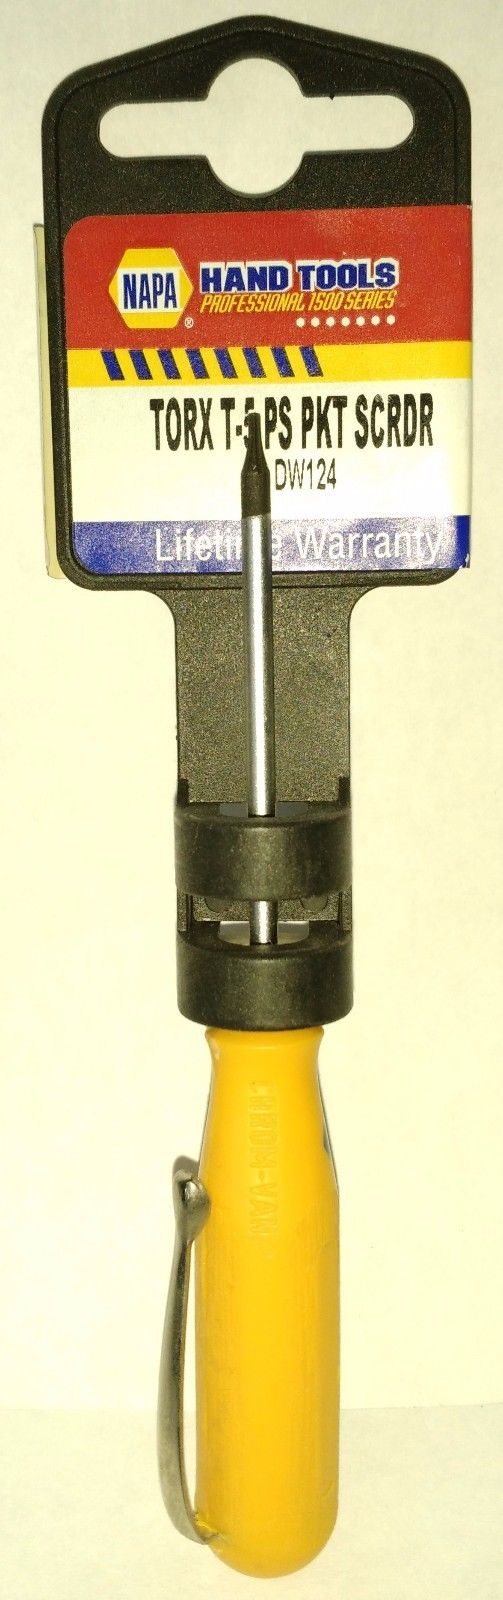 Napa DW124 Torx T-5 Pocket Screwdriver Germany